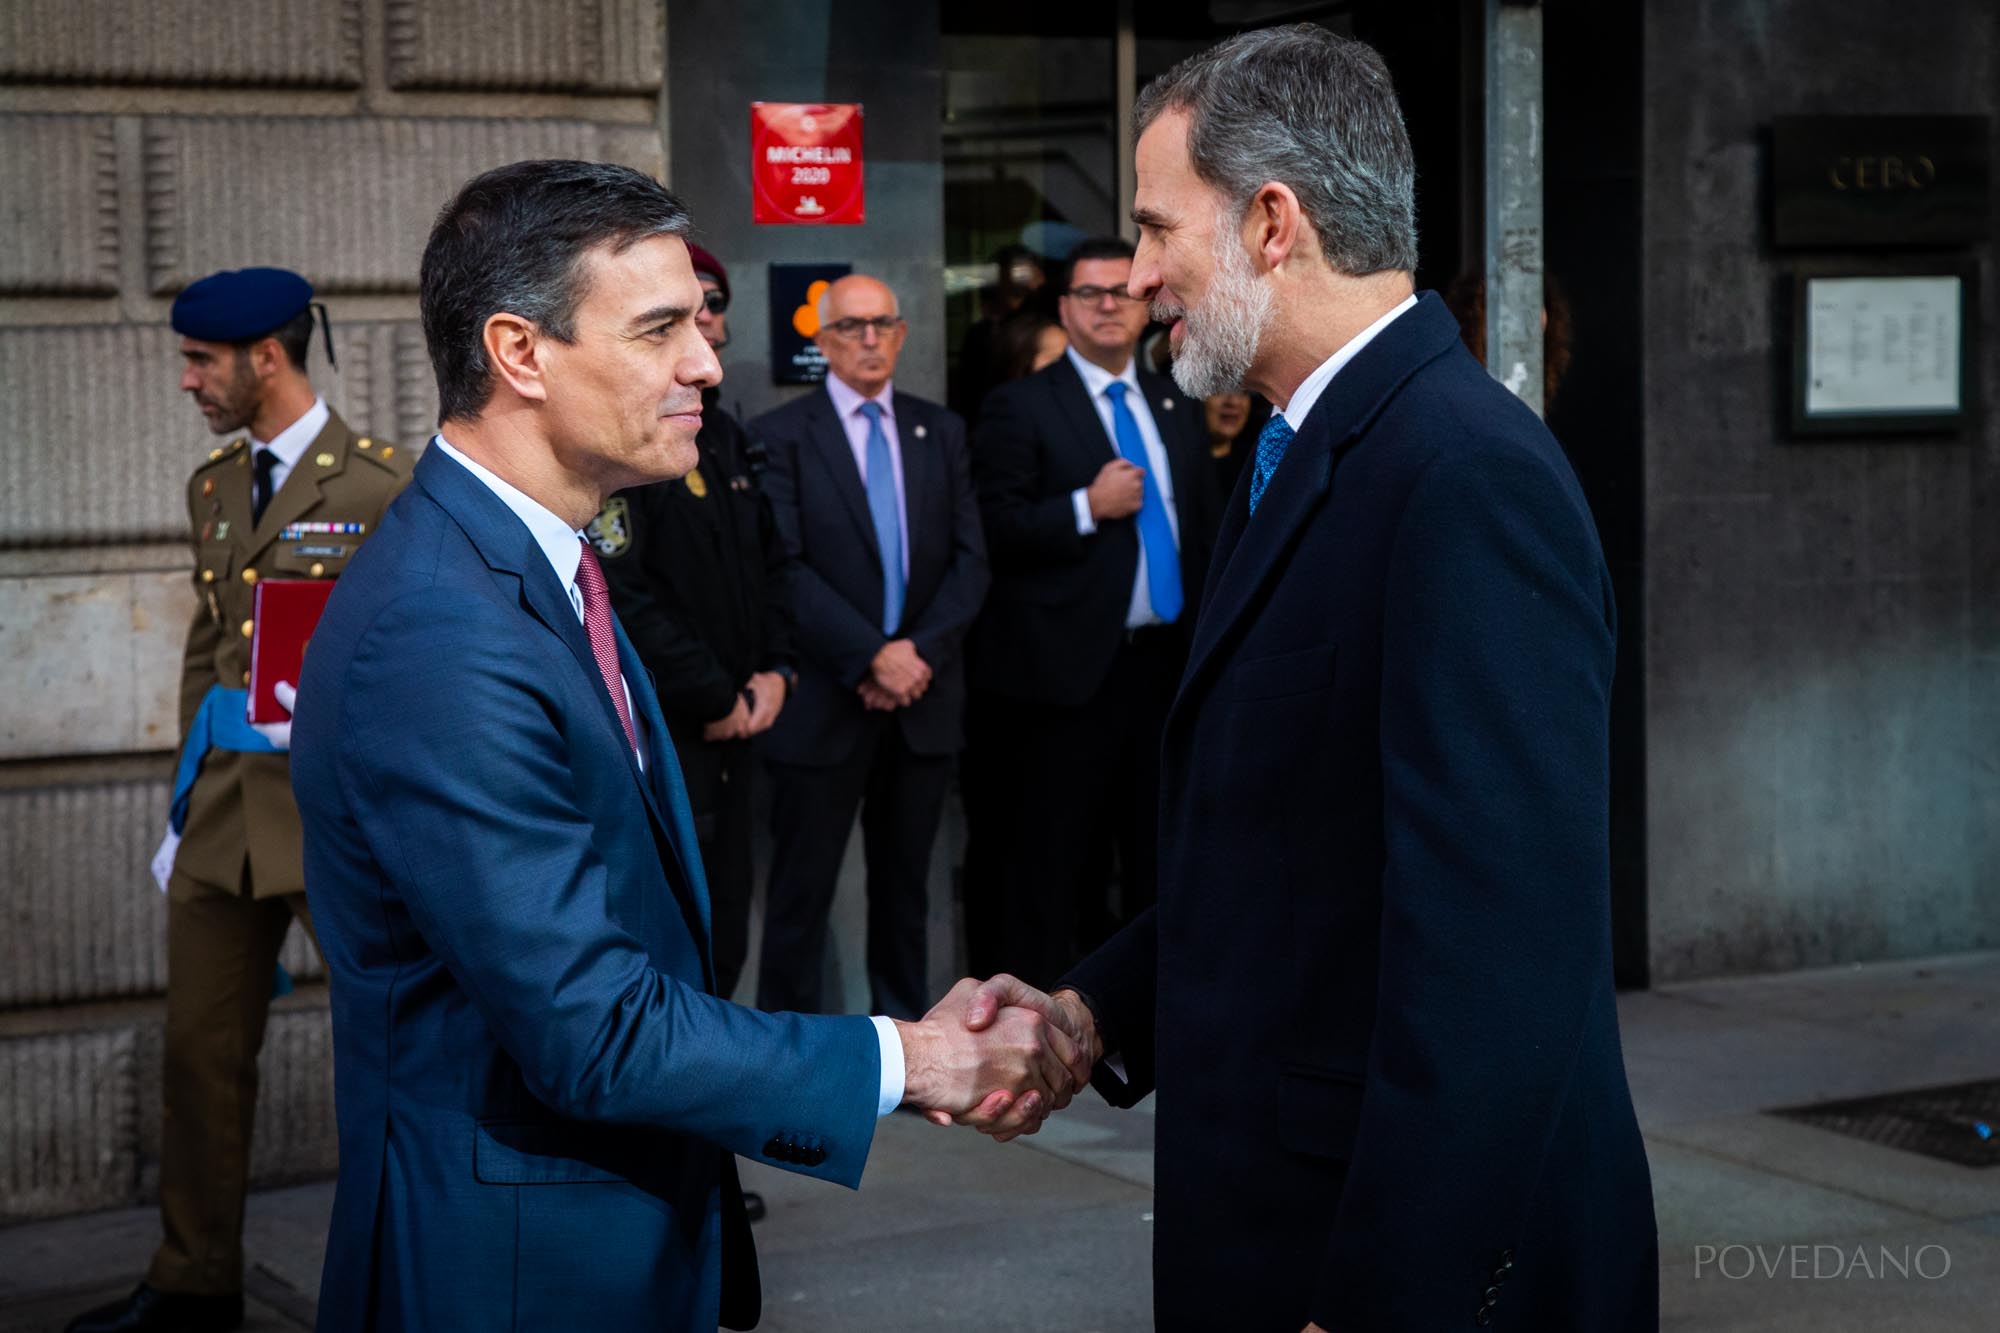 Su Majestad el Rey Don Felipe VI saluda al Sr. Presidente del Gobierno, don Pedro Sánchez Pérez-Castejón.